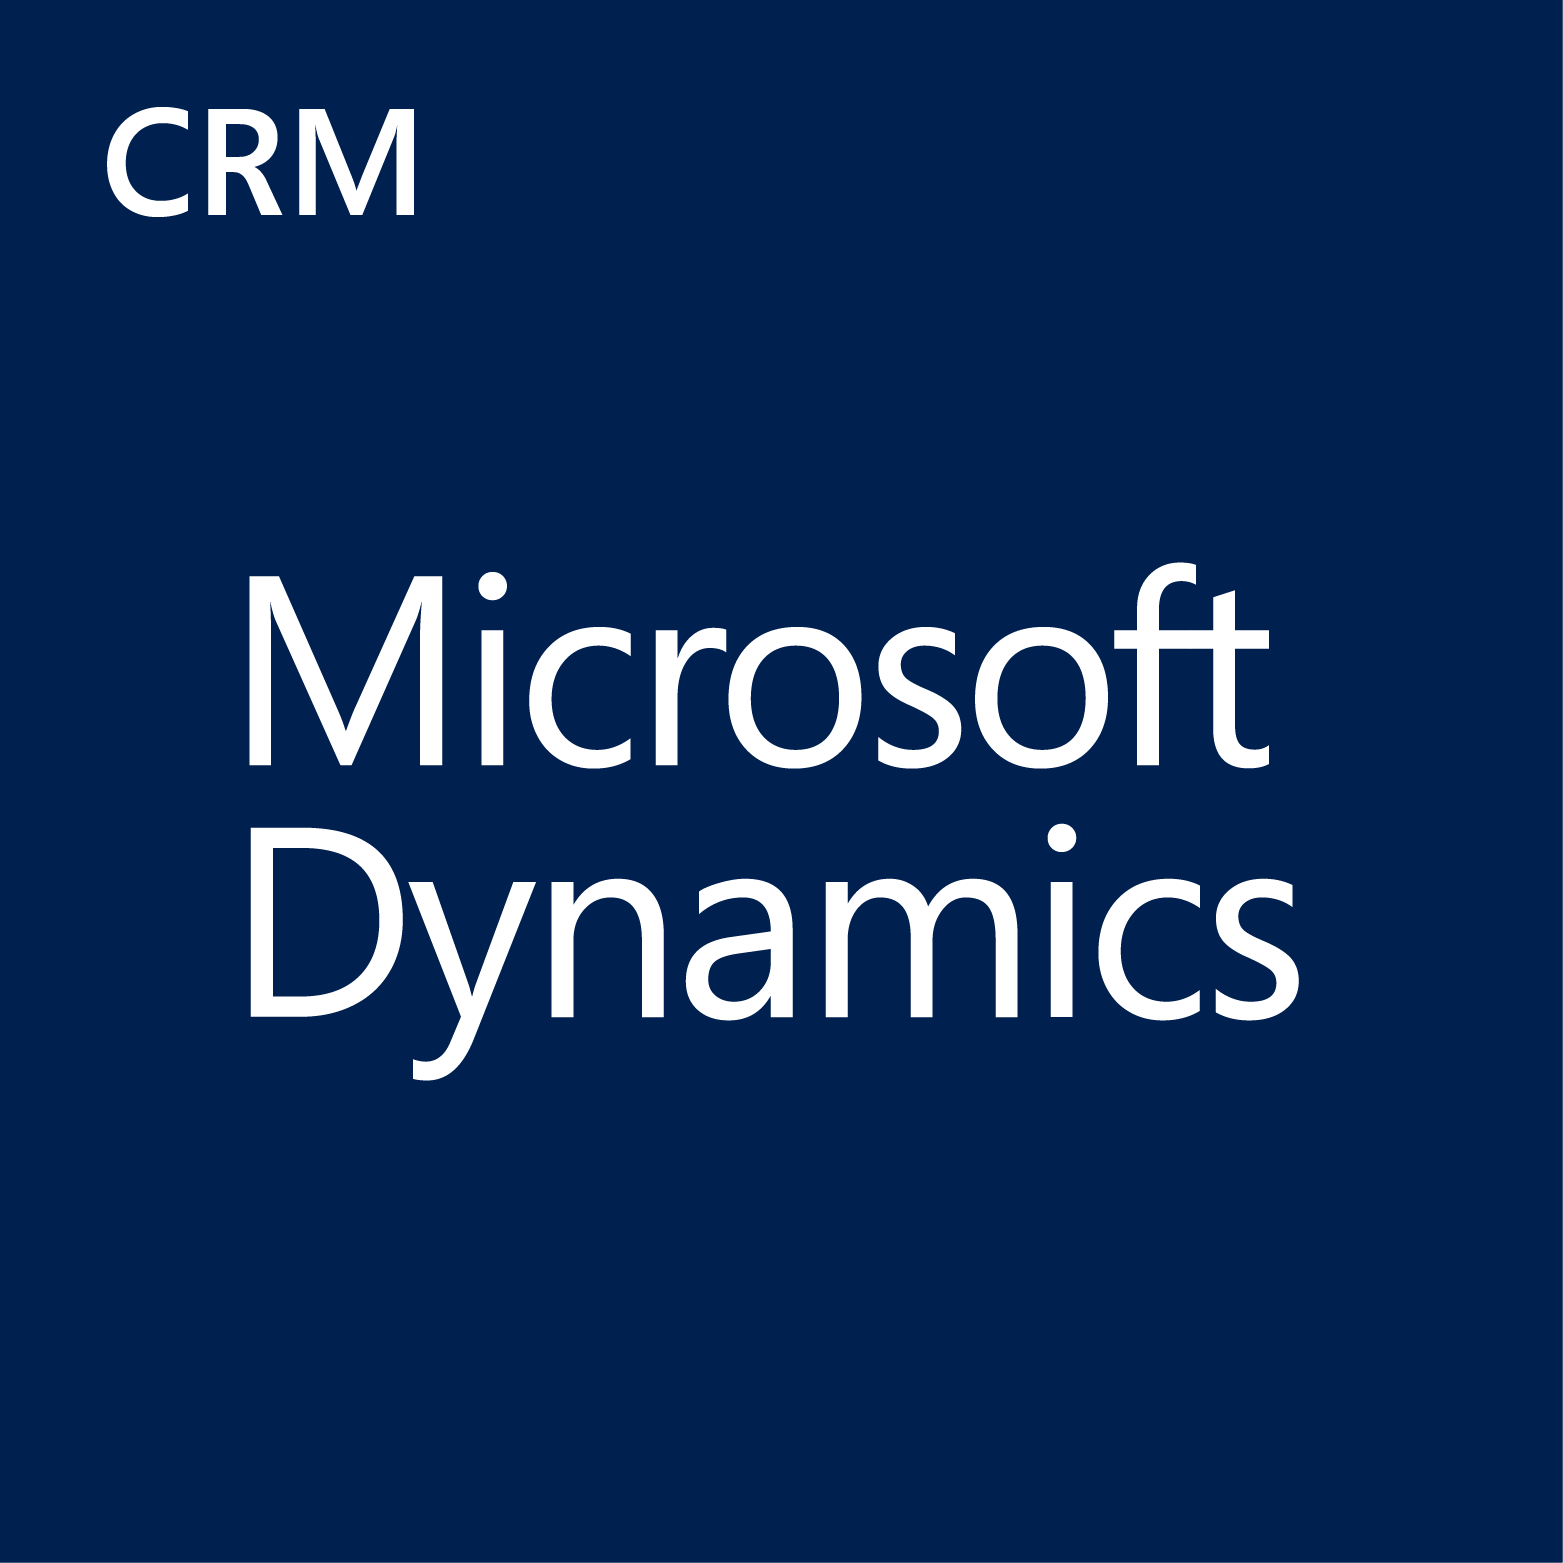 MS Dynamics CRM Logo - Microsoft Dynamics CRM | Corporate Renaissance Group